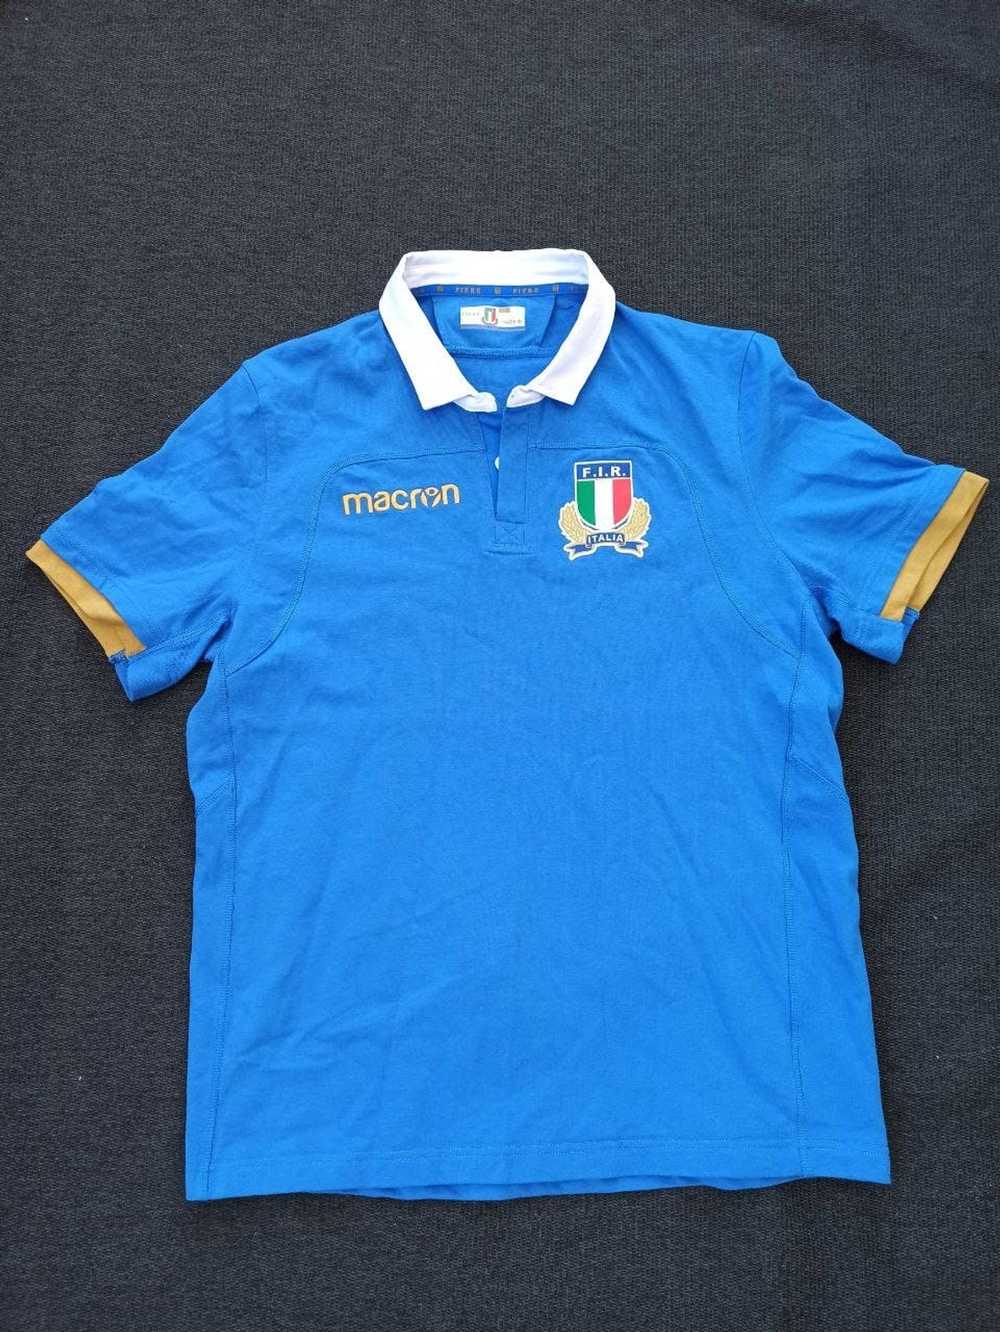 Macron Macron Italy rugby team jersey - image 1